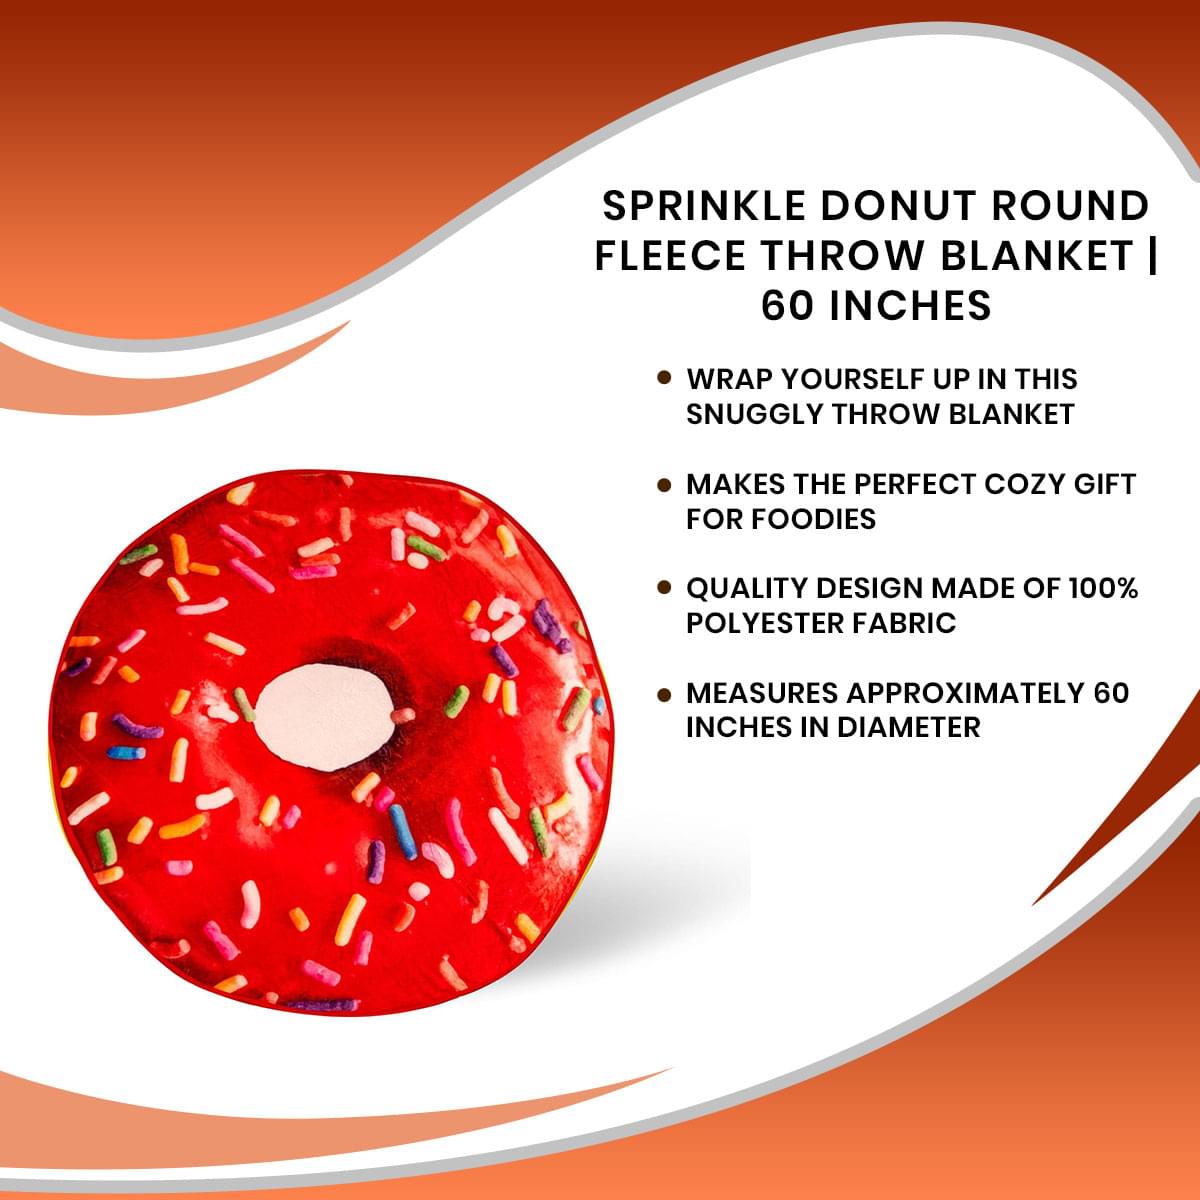 Sprinkle Donut Round Fleece Throw Blanket | 60 Inches